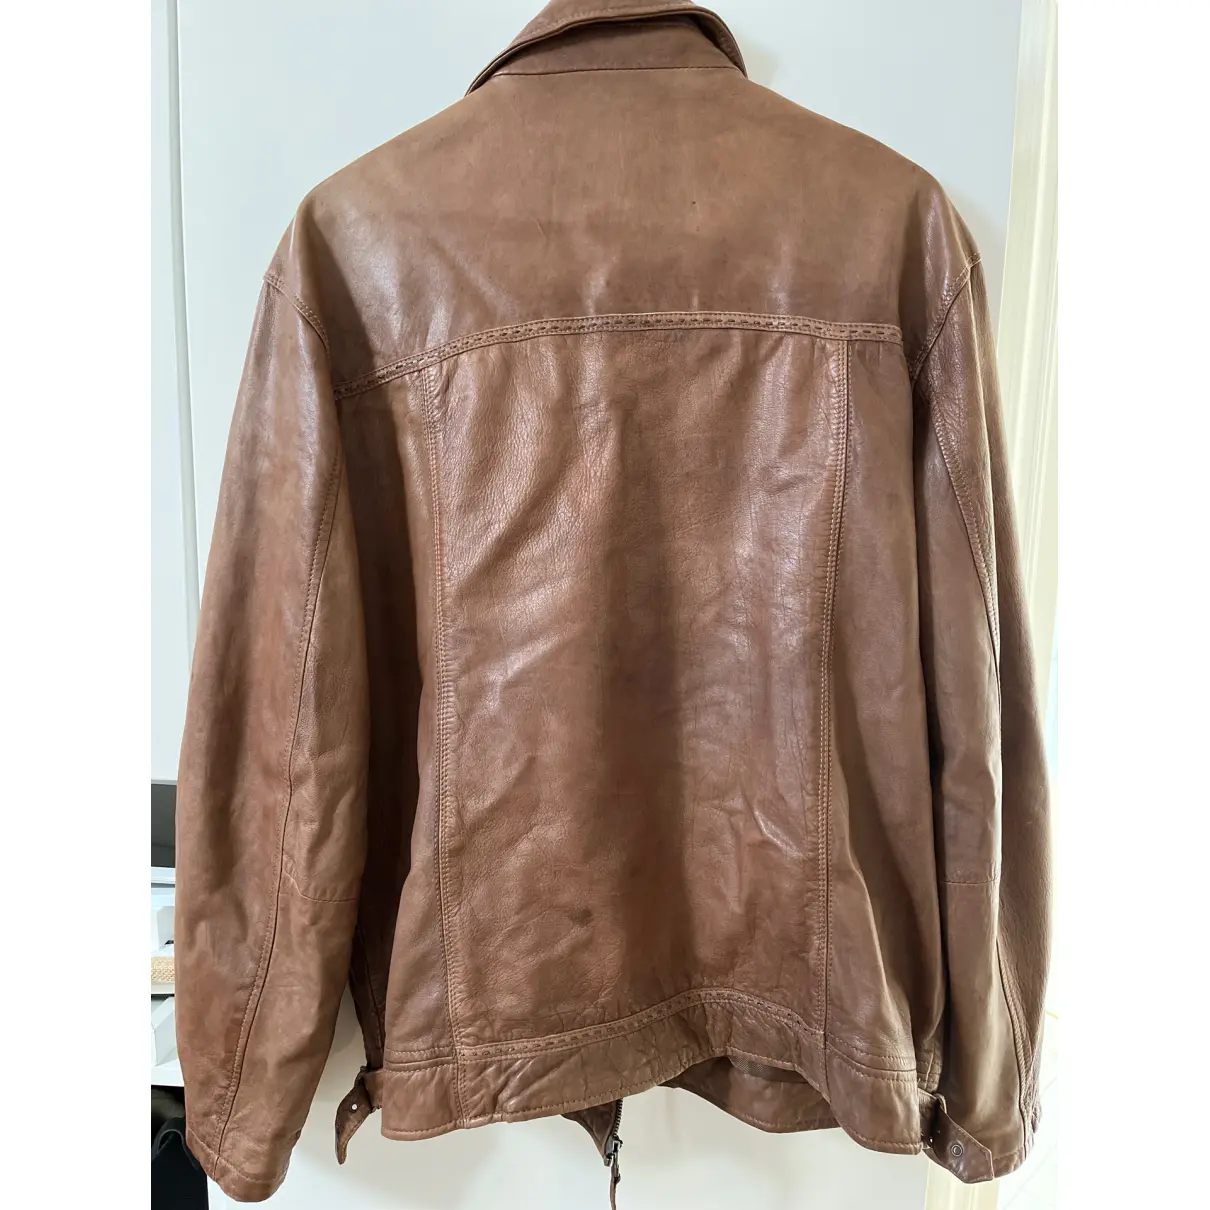 Buy CARLO COLUCCI Leather vest online